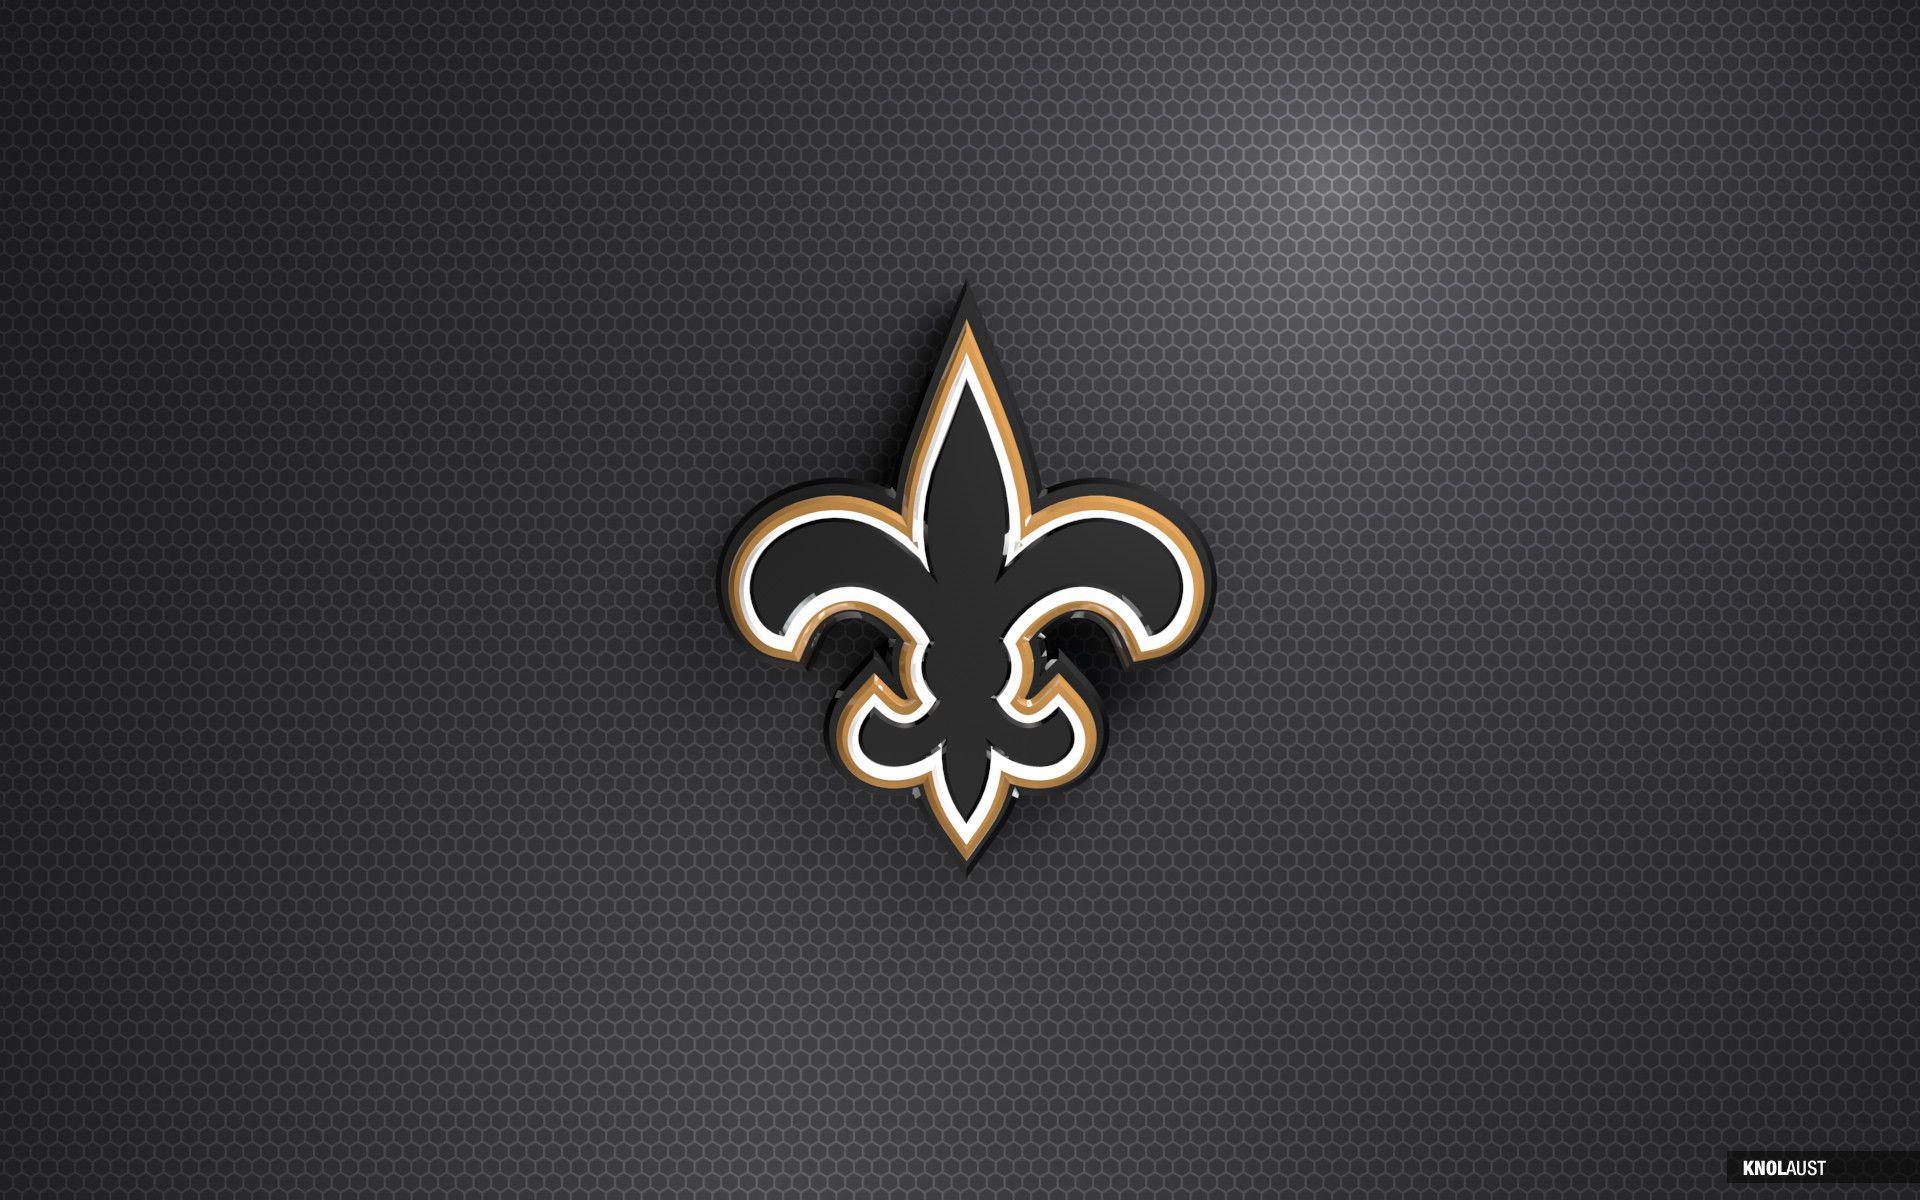 Enjoy this new New Orleans Saints desktop background. New Orleans